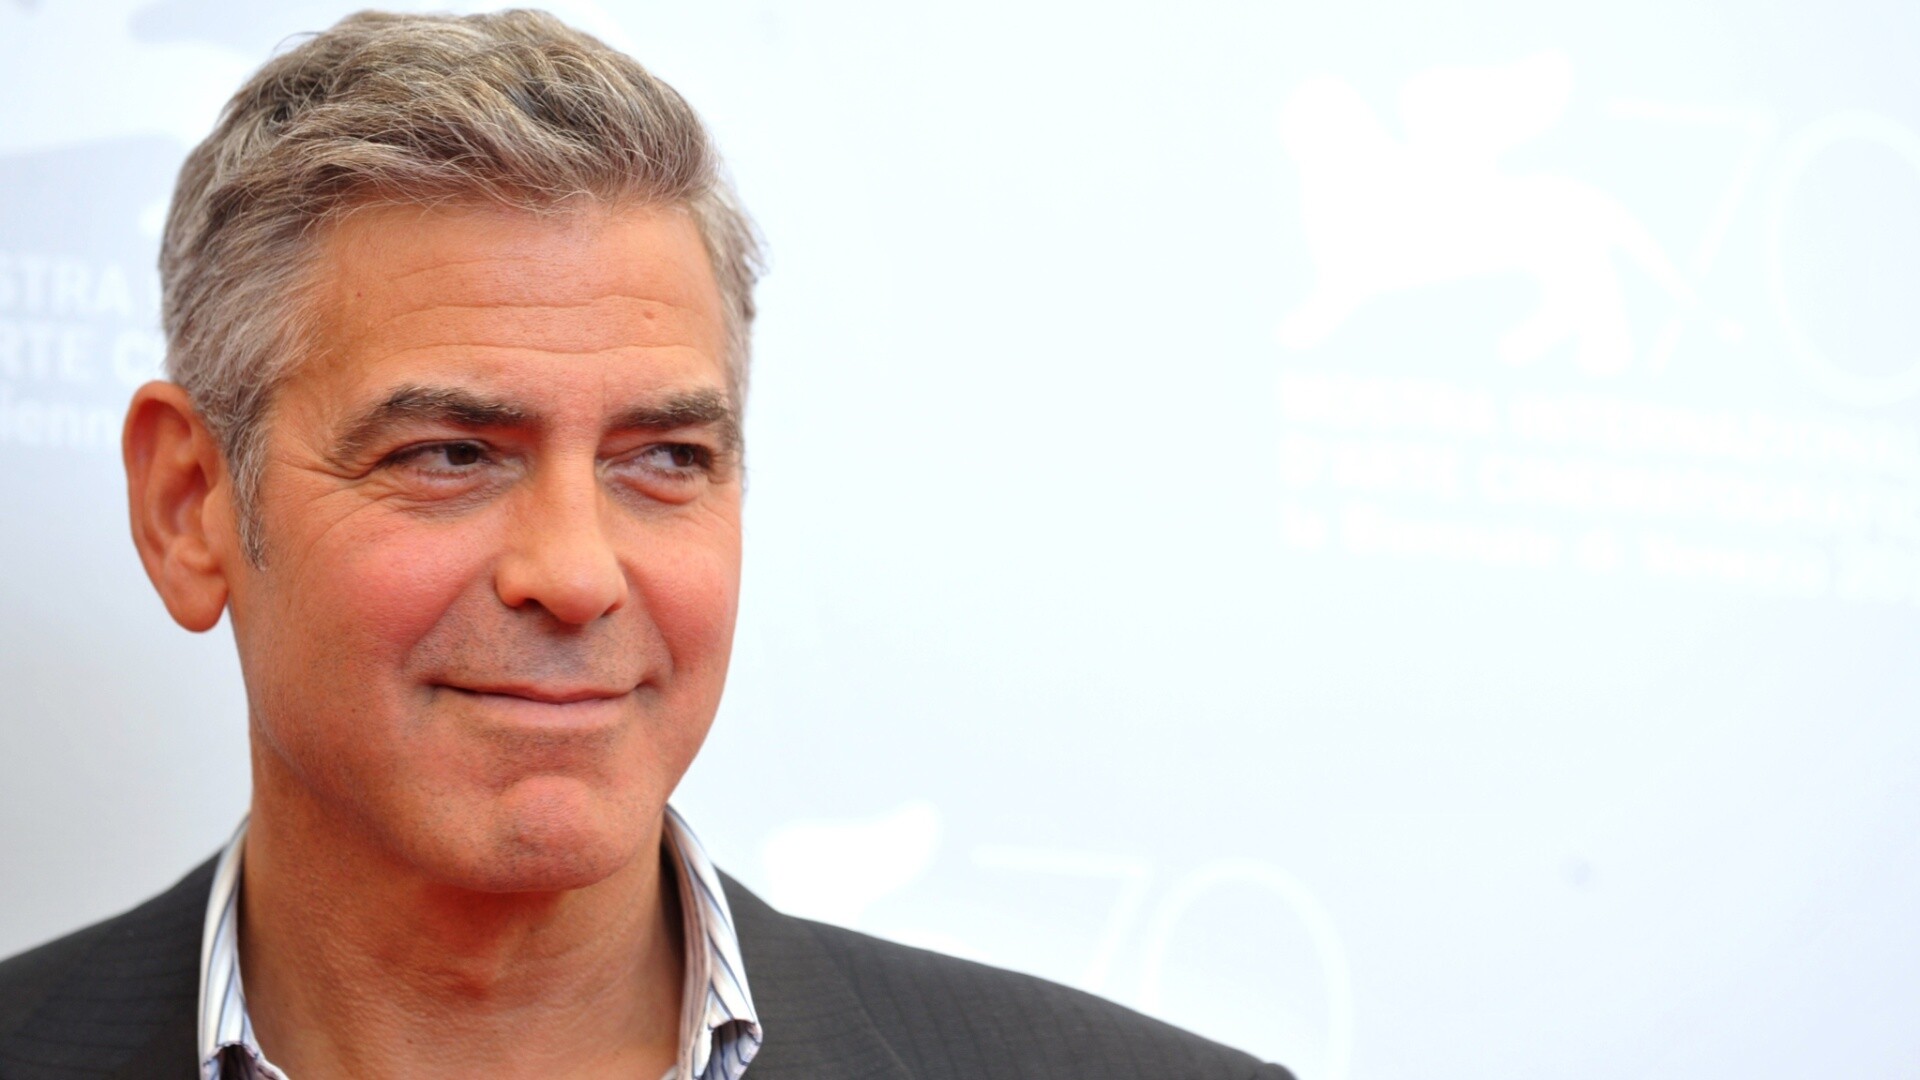 George Clooney Wallpapers